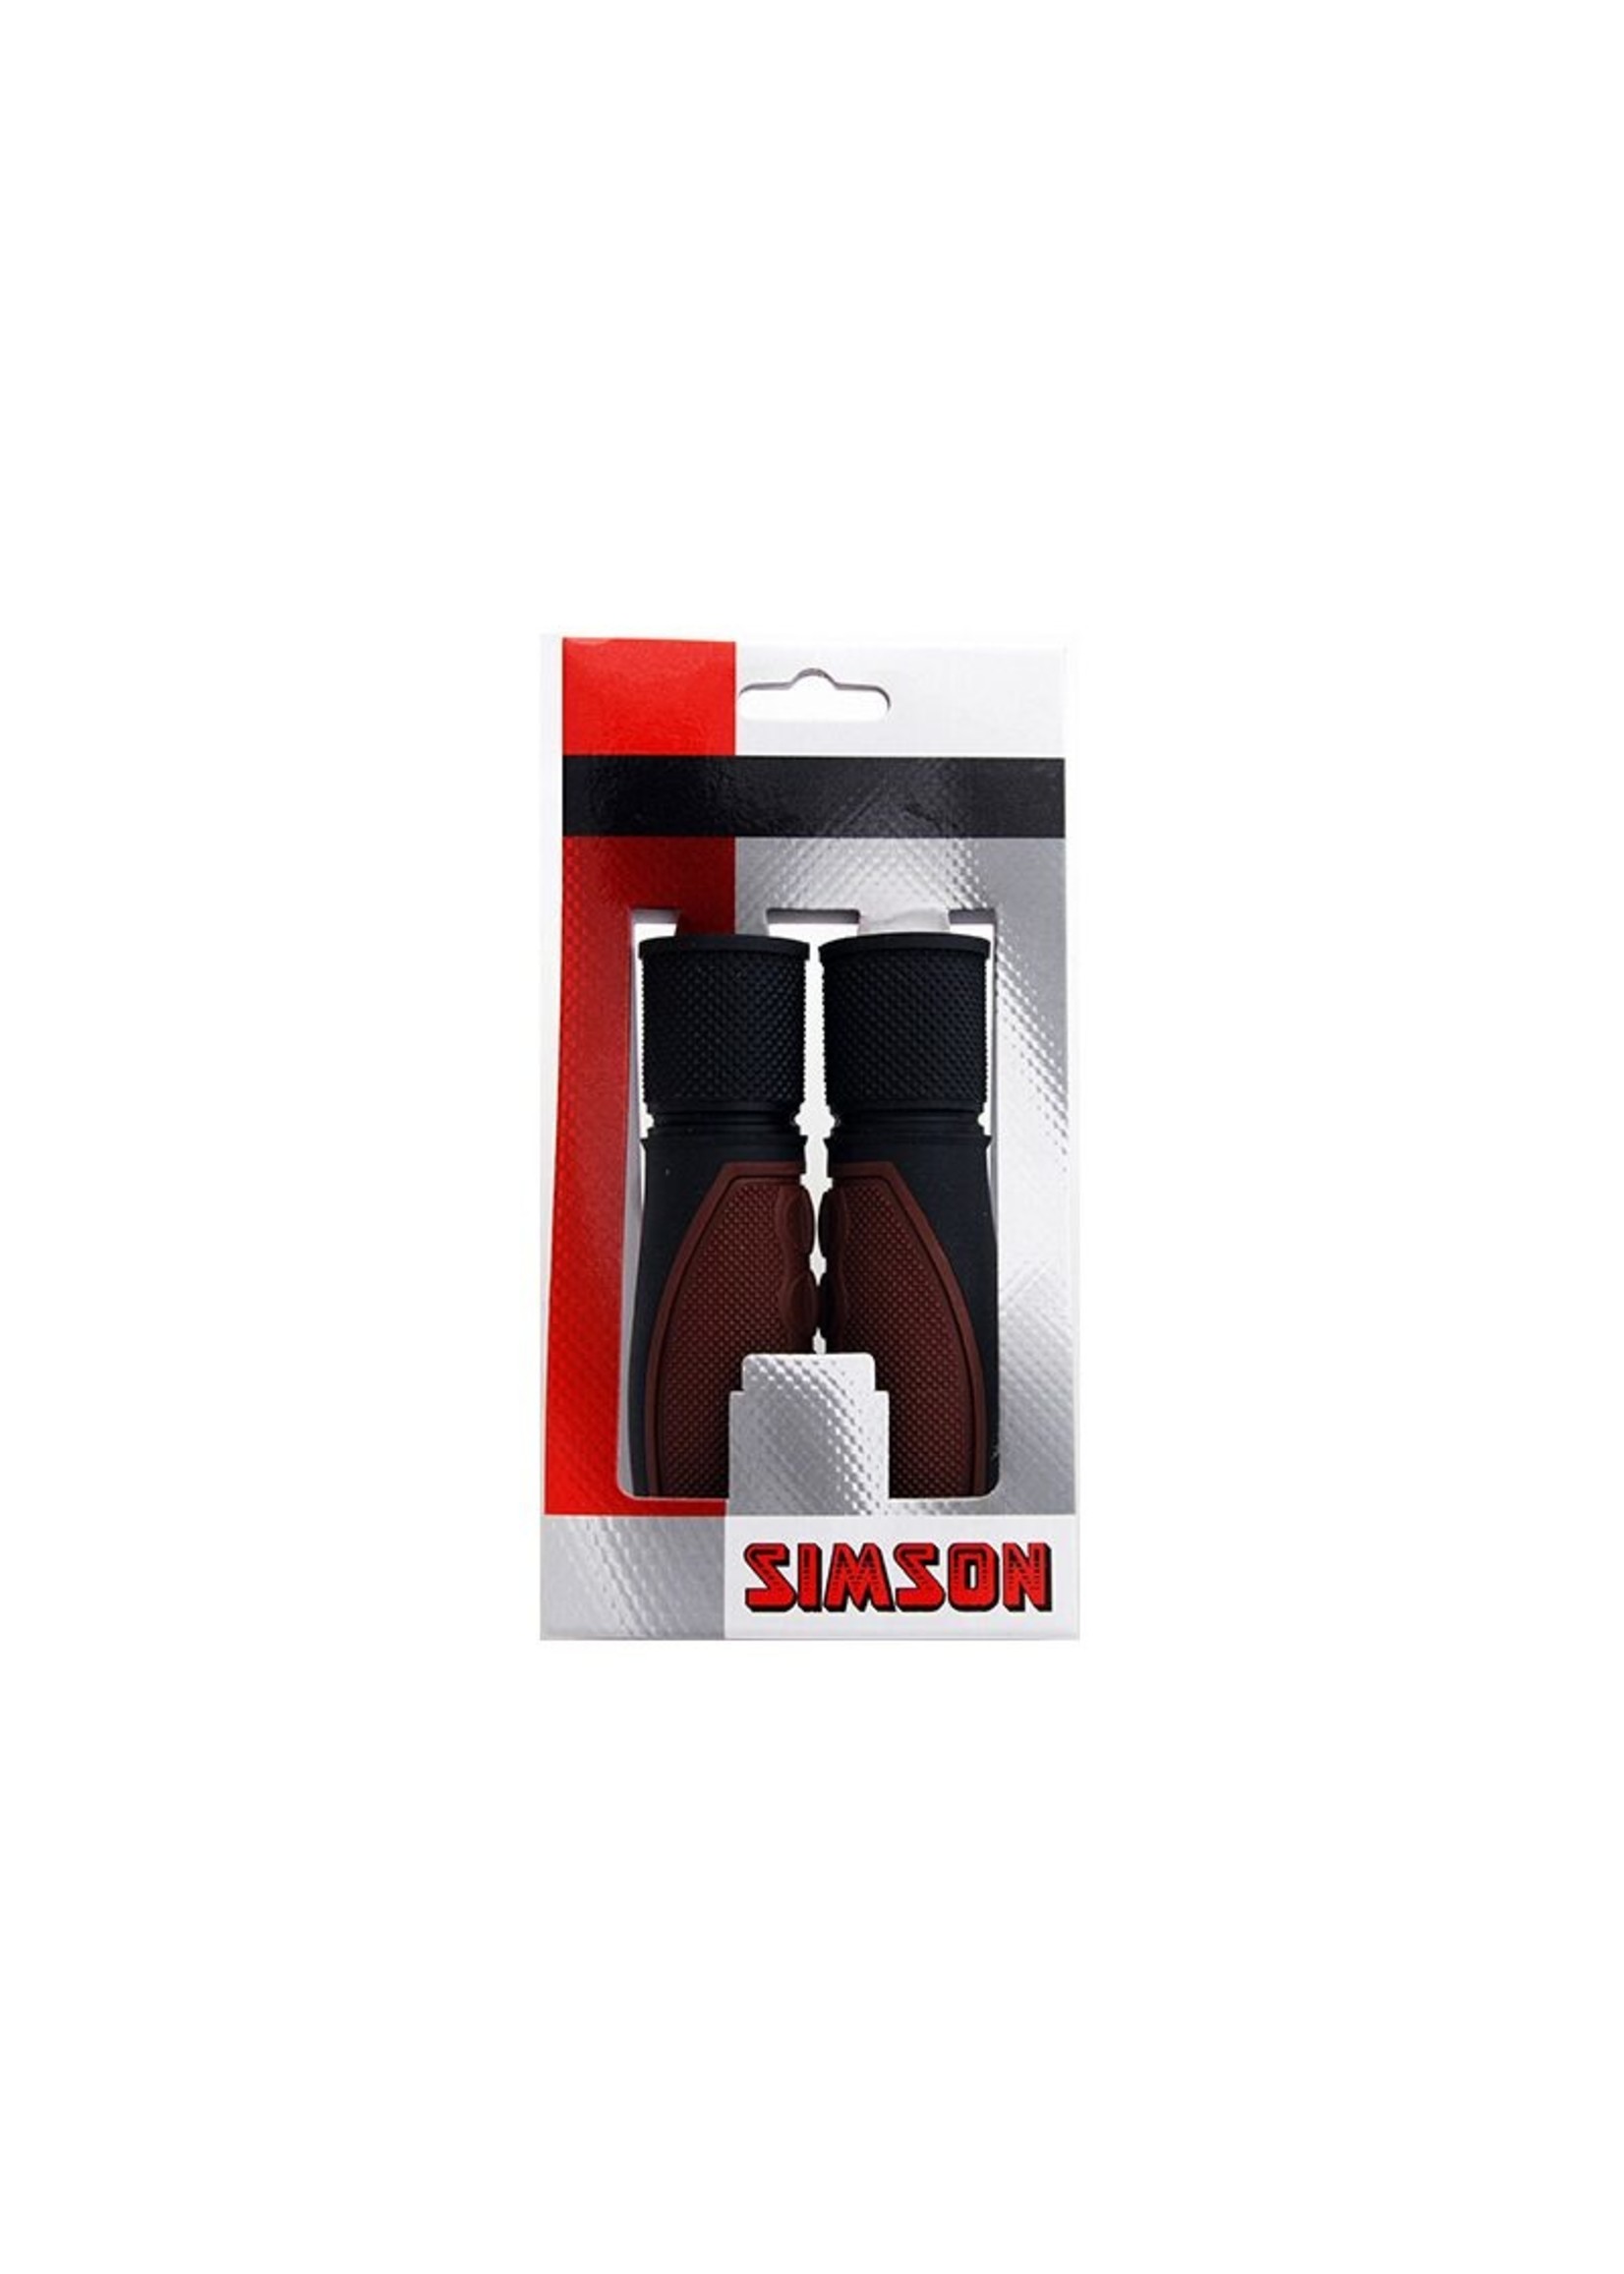 Simson - Grips Lifestyle dunkelbraun-schwarz